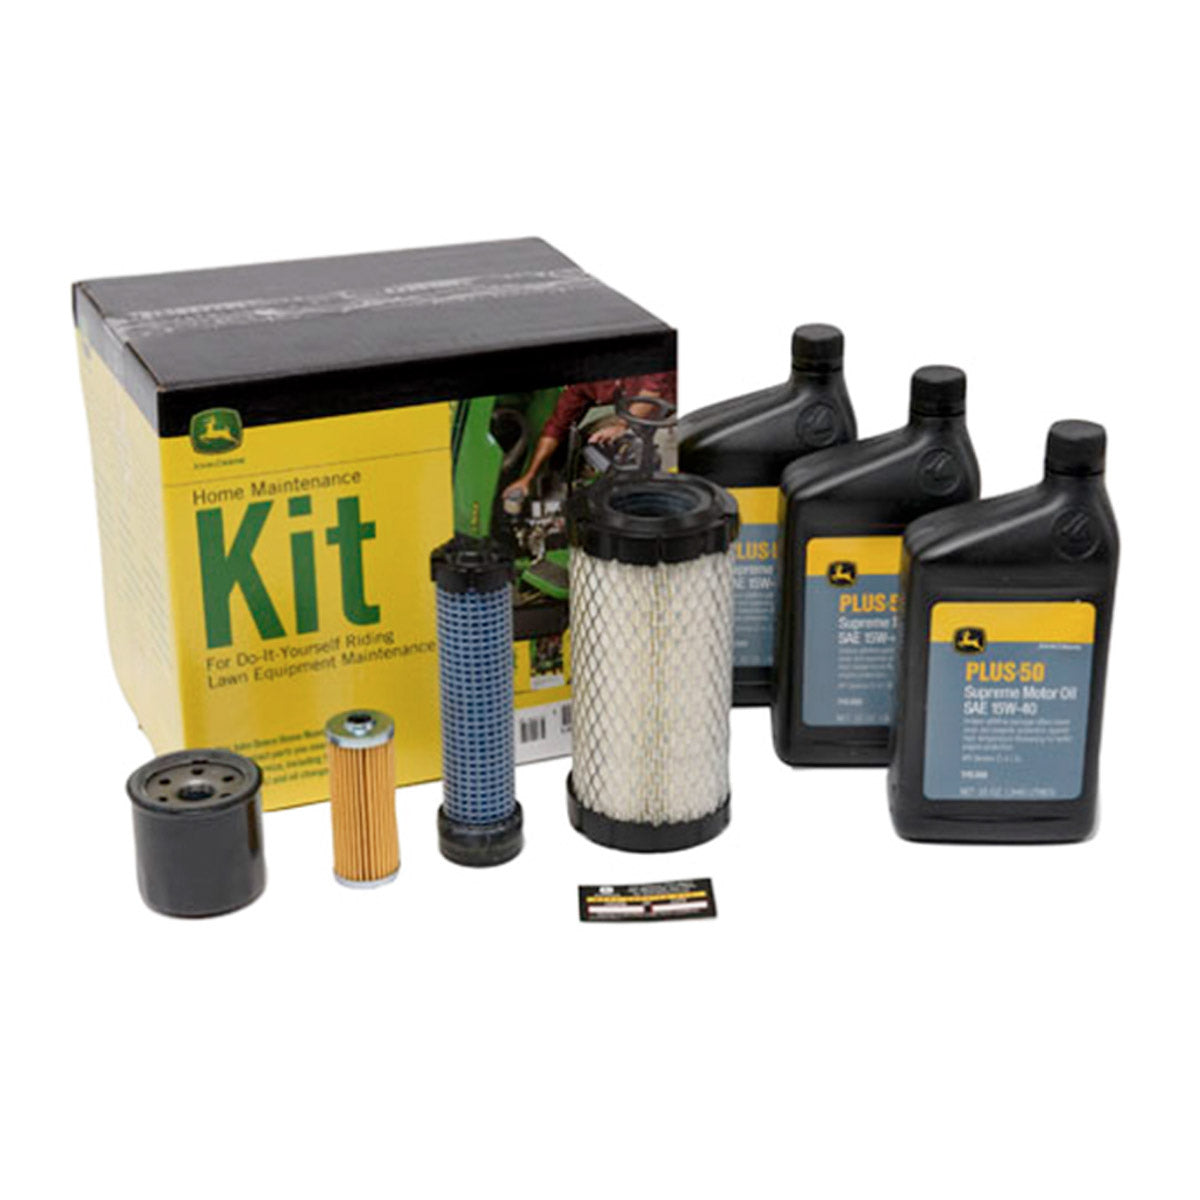 John Deere Home Maintenance Kit for X400, X500, X700 Series & Gators - LG260